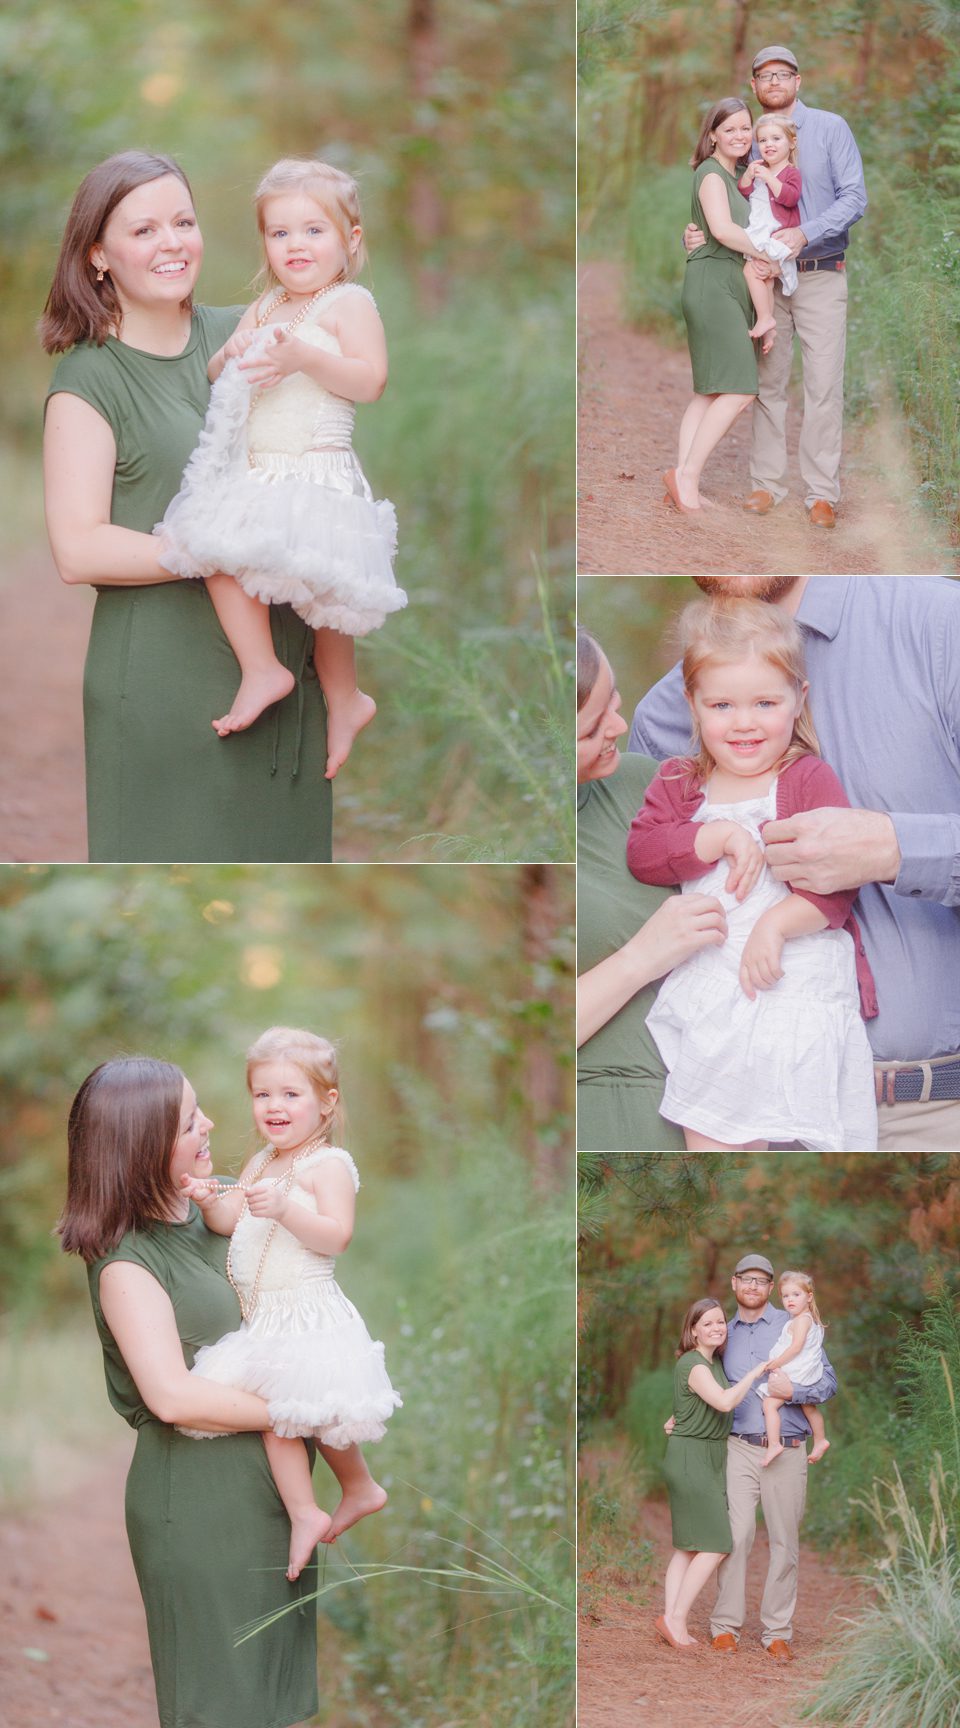 Professional family photoshoot in Oconee County, GA.